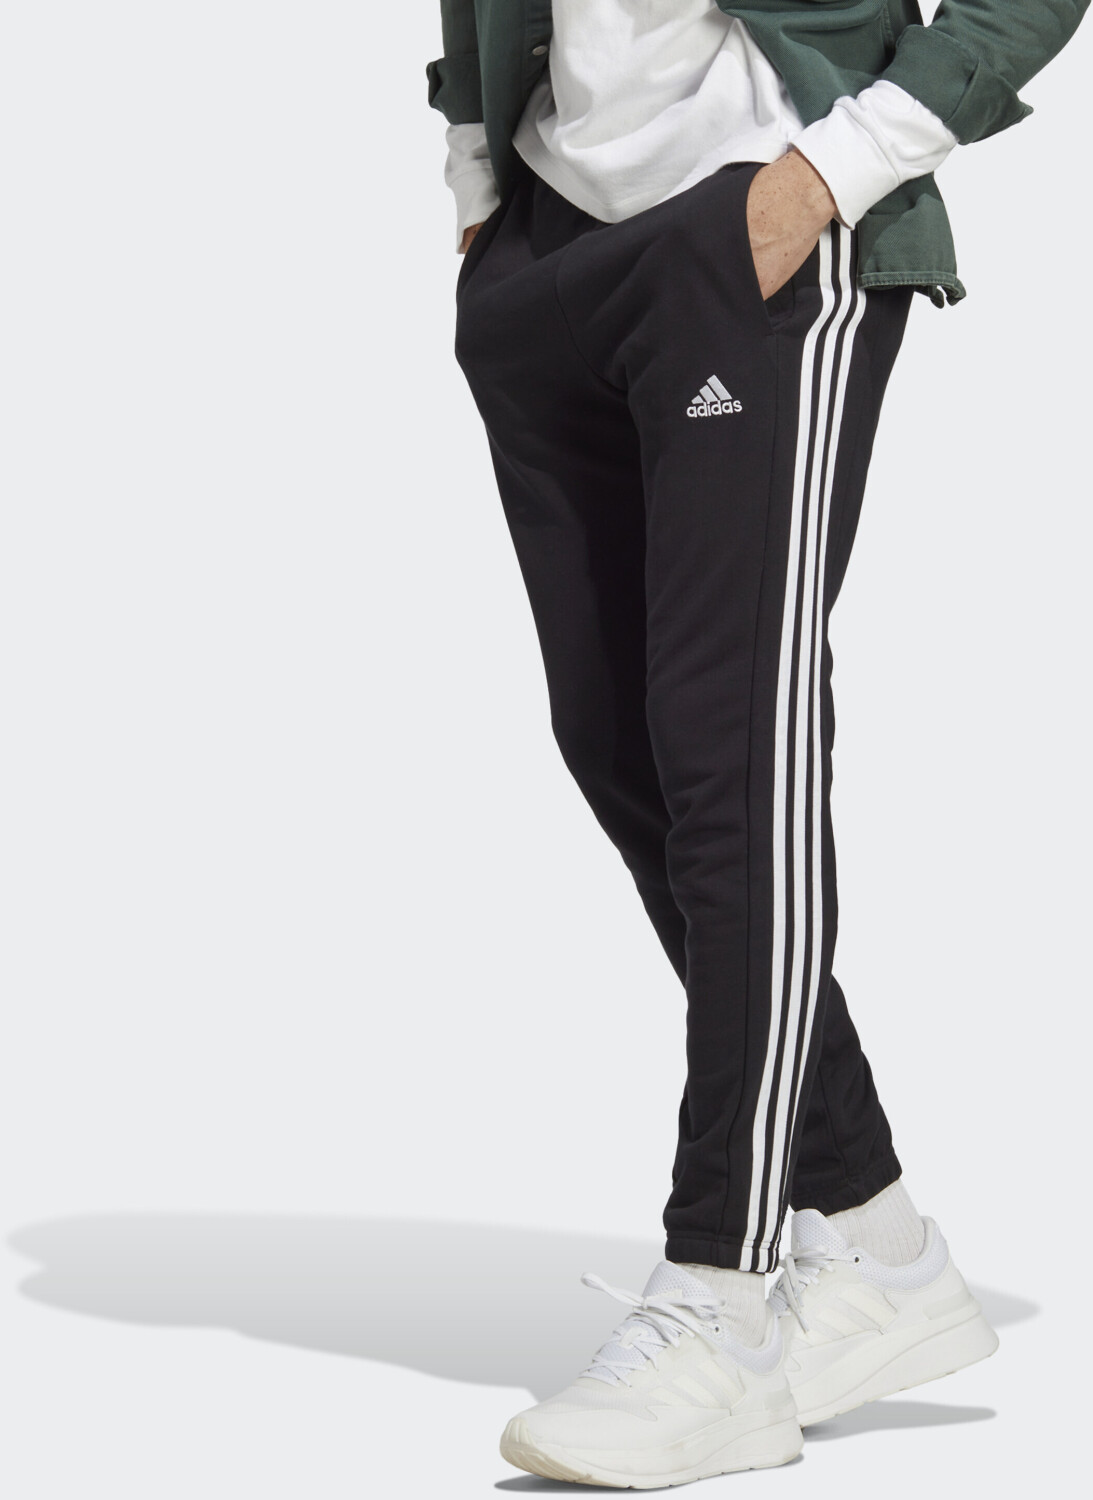 Adidas Man Essentials French black/white Pants 3-Stripes Terry 39,99 Elastic Tall | (IC00500024) € ab Tapered Cuff bei Preisvergleich